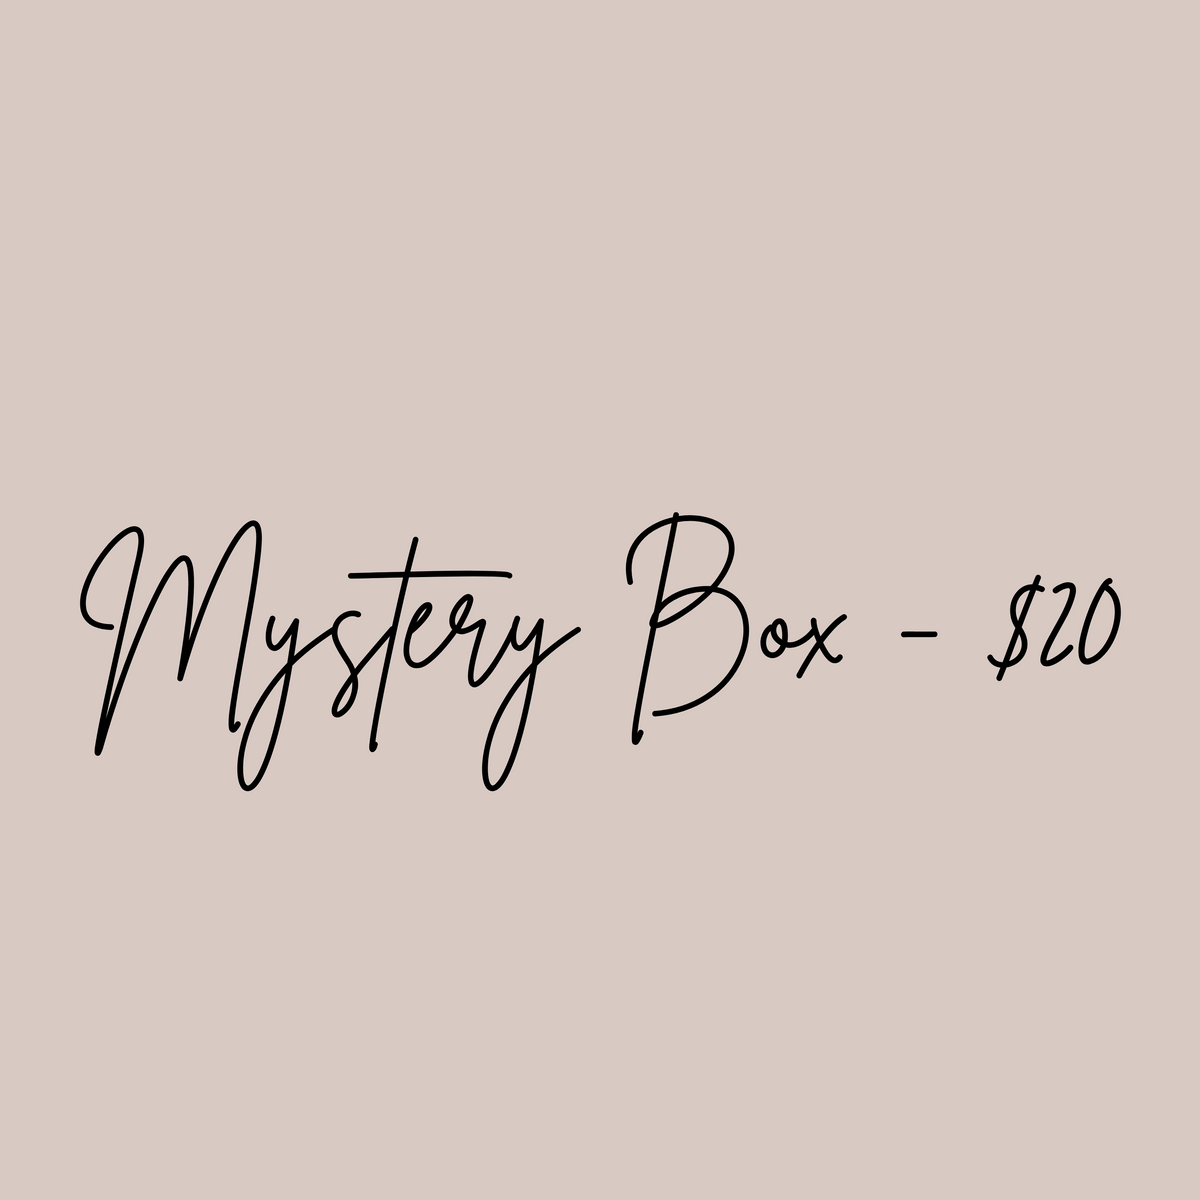 Mystery Box - $20